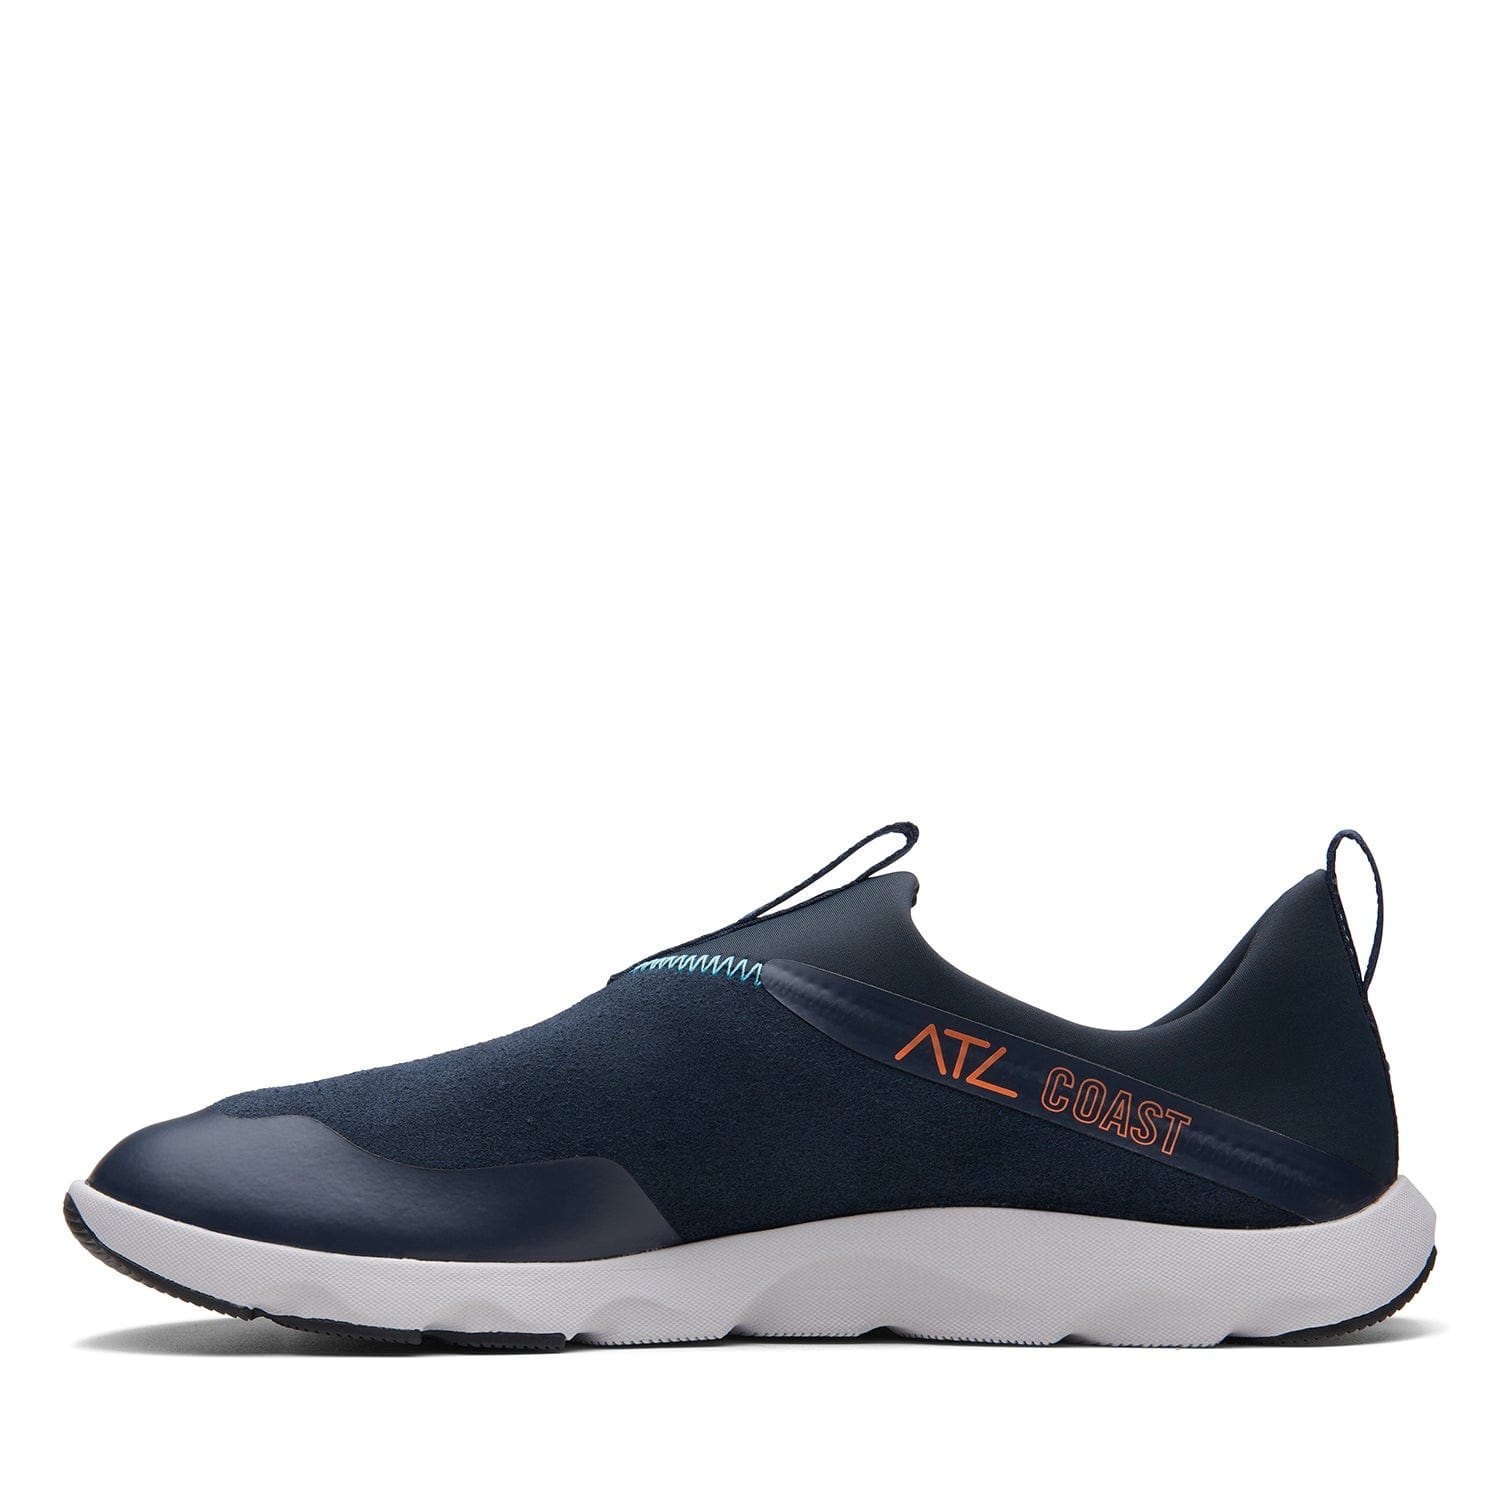 Clarks Atl Coast Moc - Shoes - Navy - 261705537 - G Width (Standard Fit)